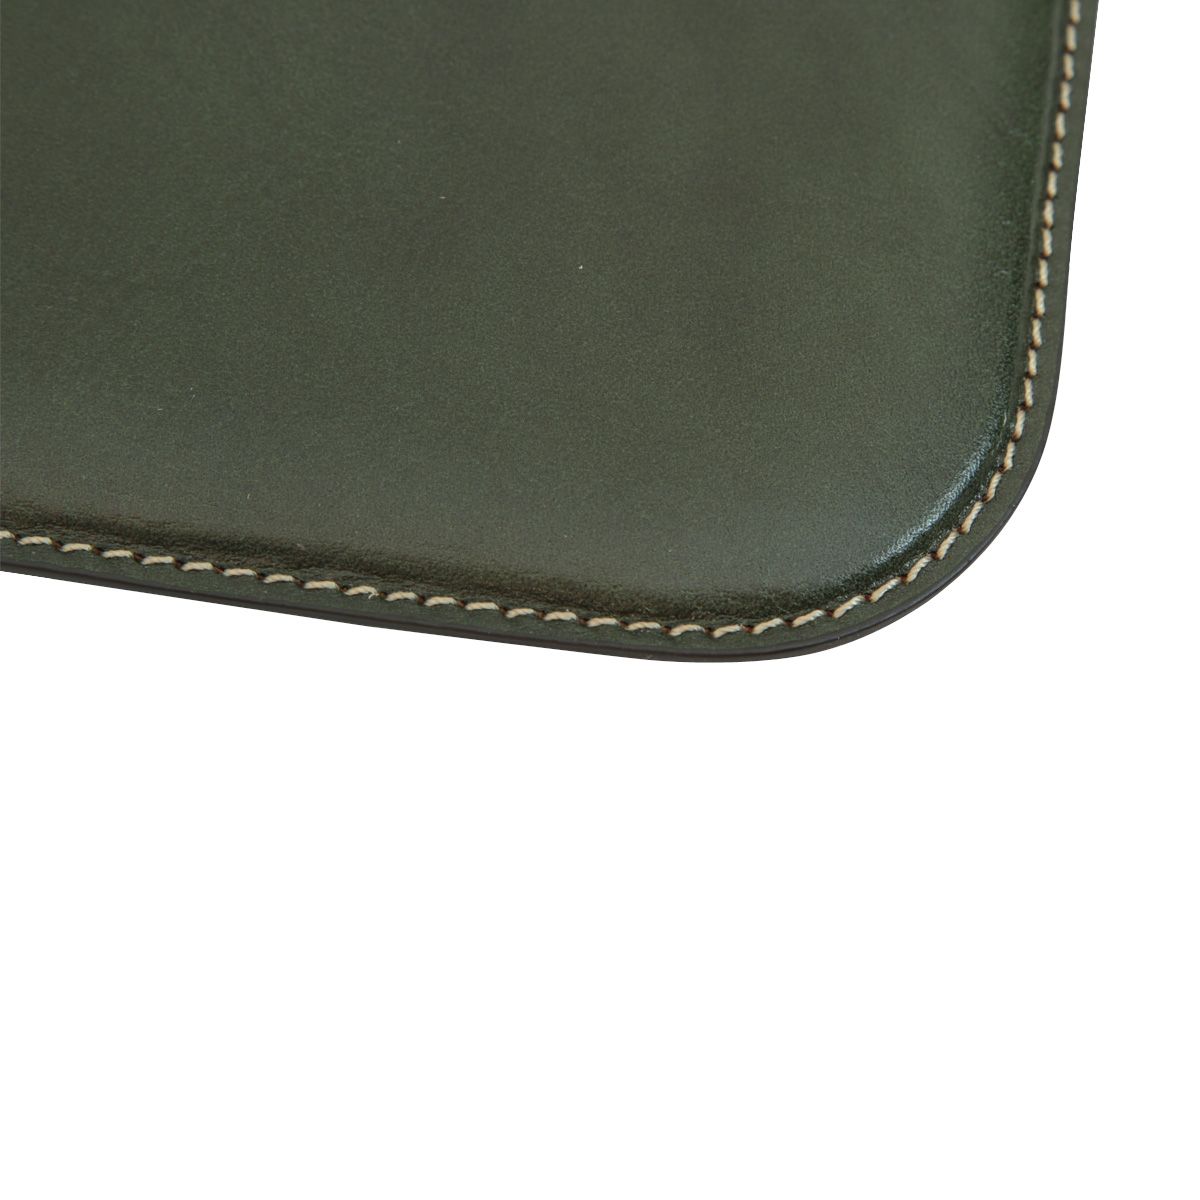 Leather Desk pad - green|760089VE|Old Angler Firenze